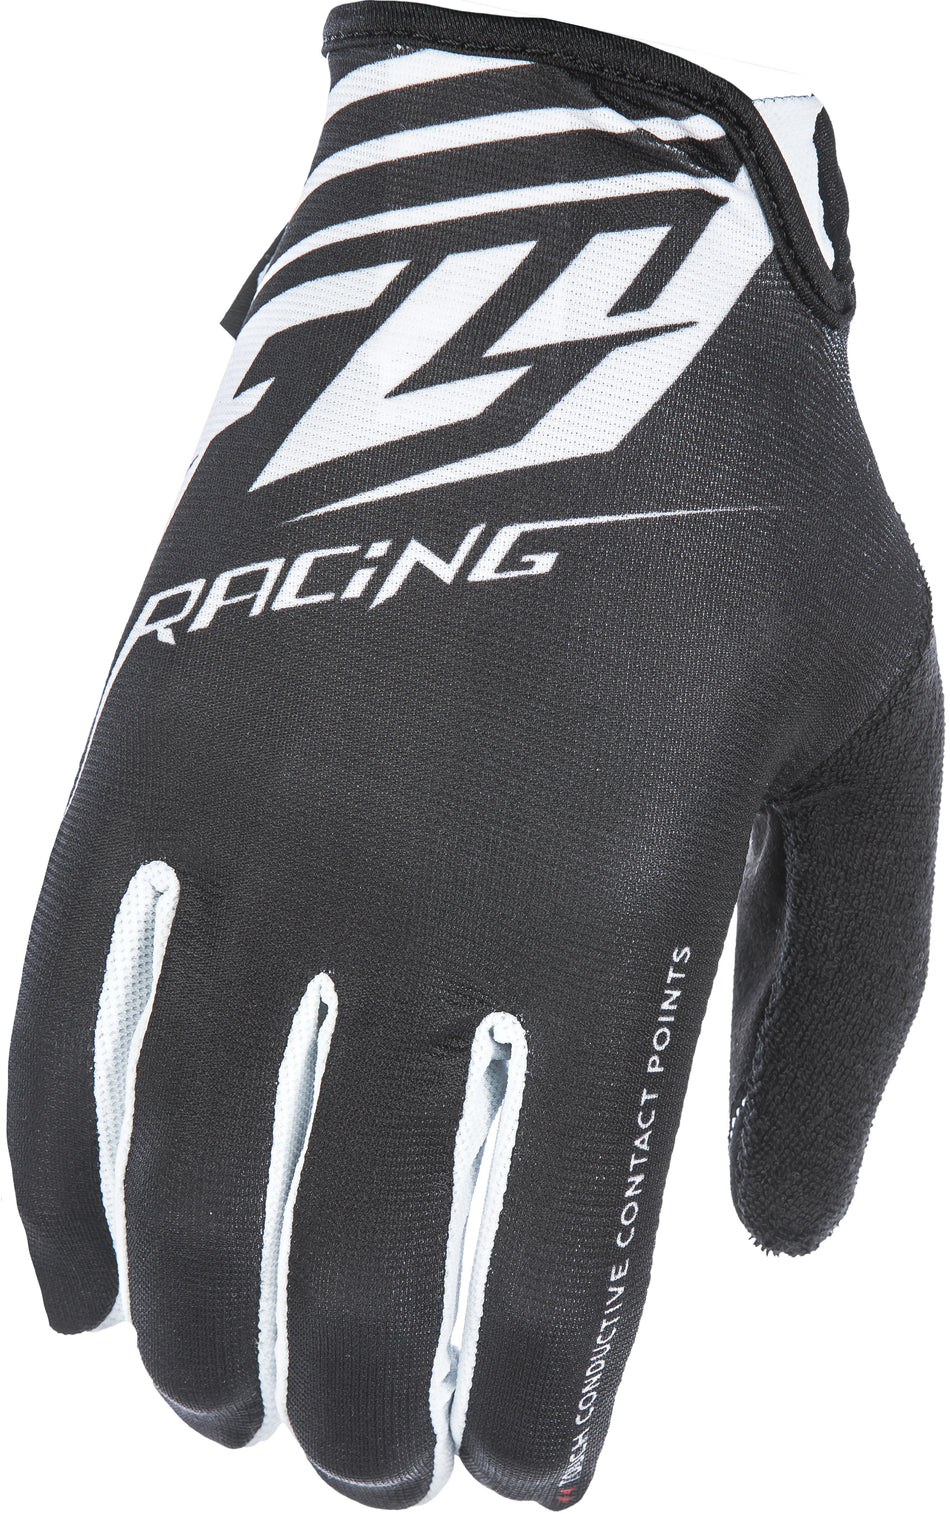 FLY RACING Media Gloves Black/White Sz 11 350-07411